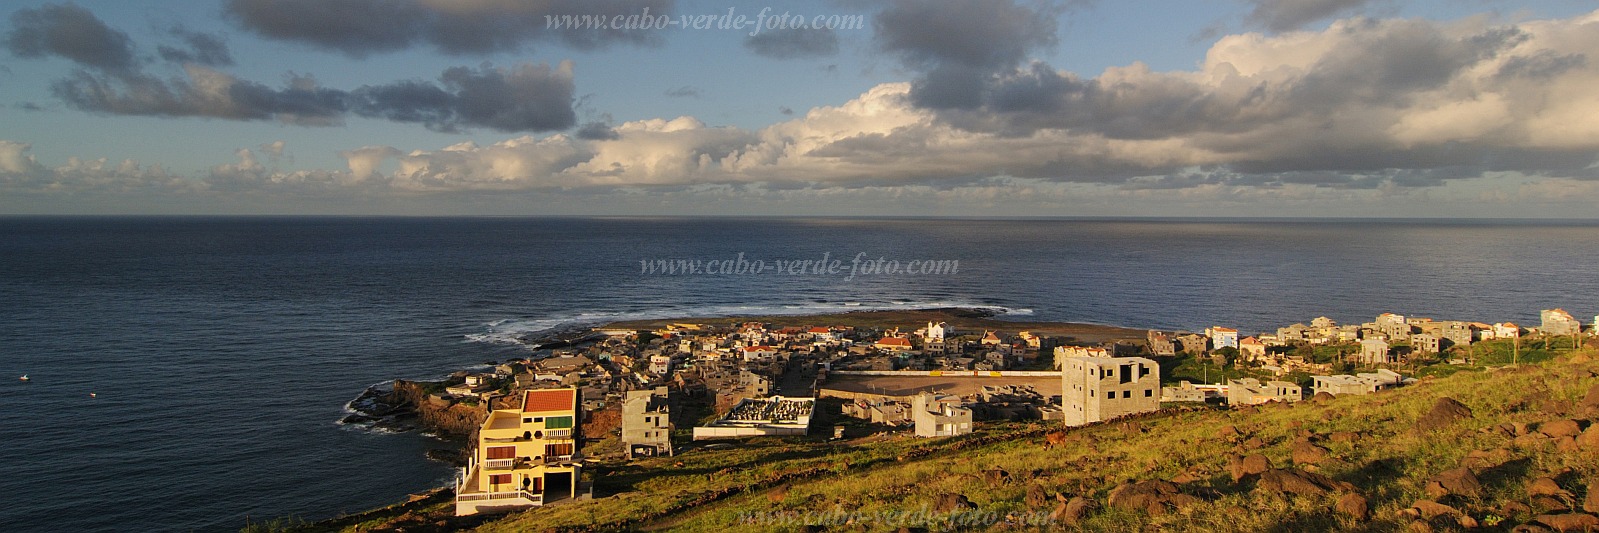 Santo Anto : Ponta do Sol : town peninsula : Landscape SeaCabo Verde Foto Gallery